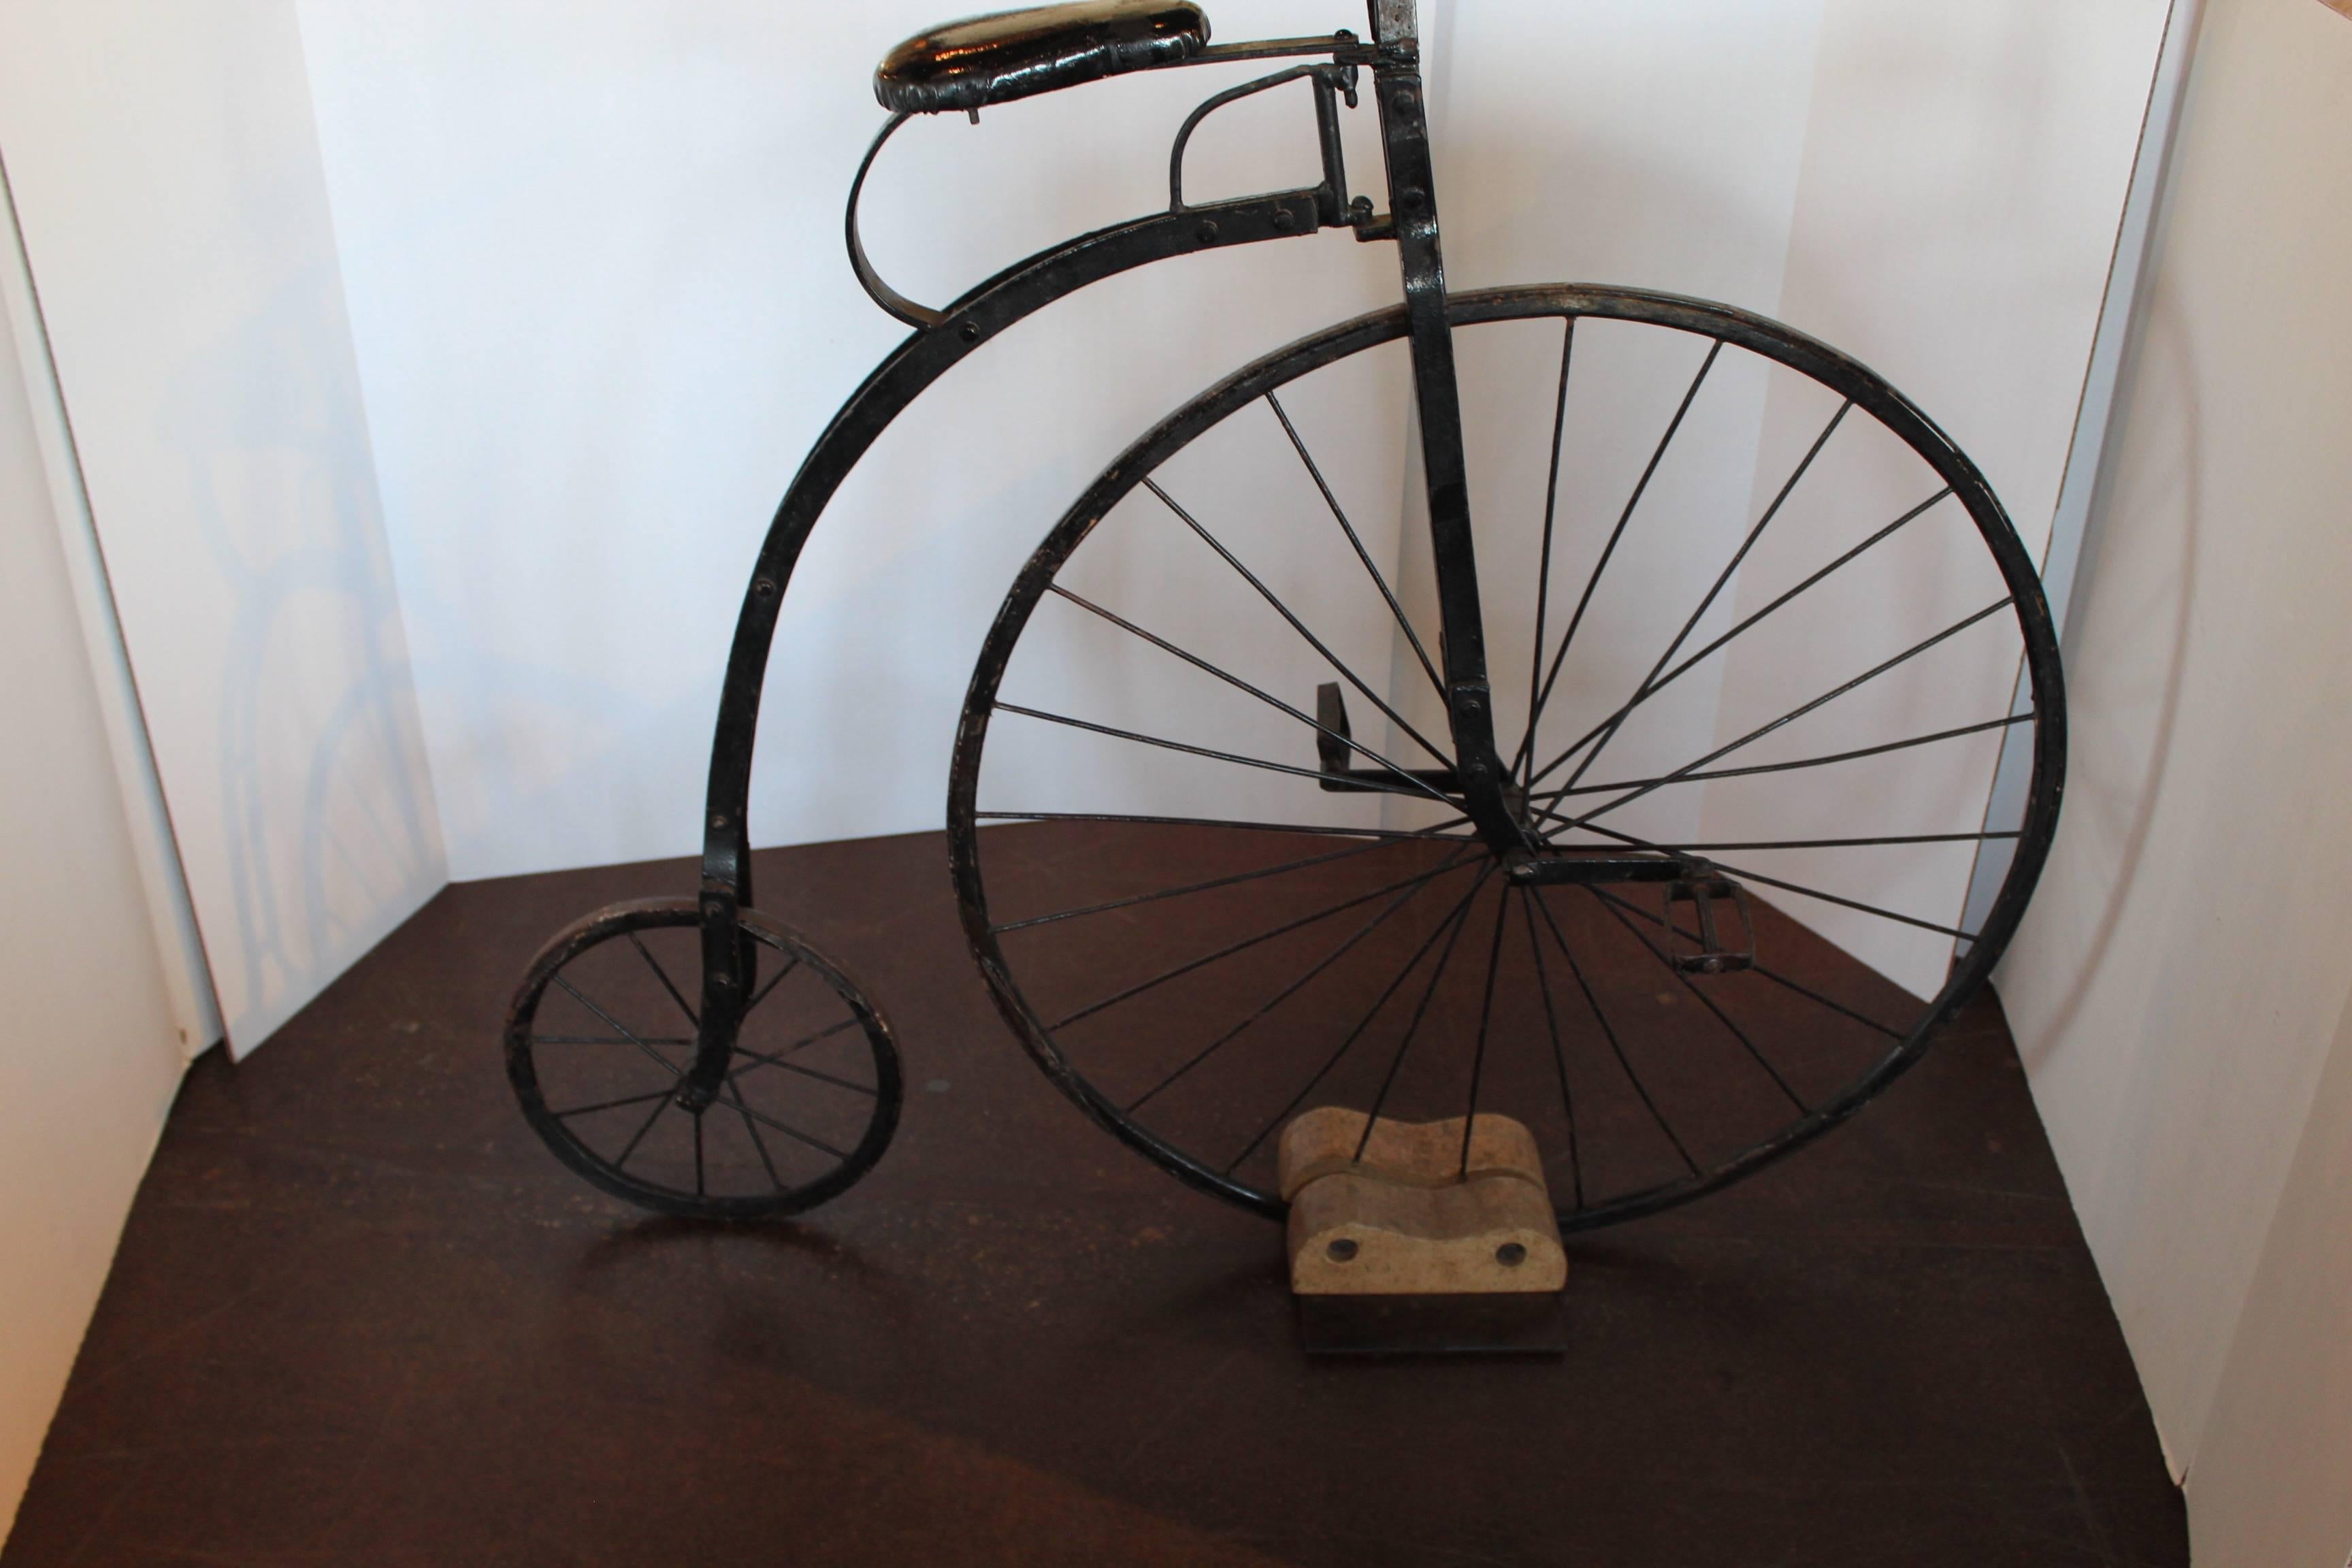 Industrial British High Wheeler Bicycle as Mount Decor, circa 1900